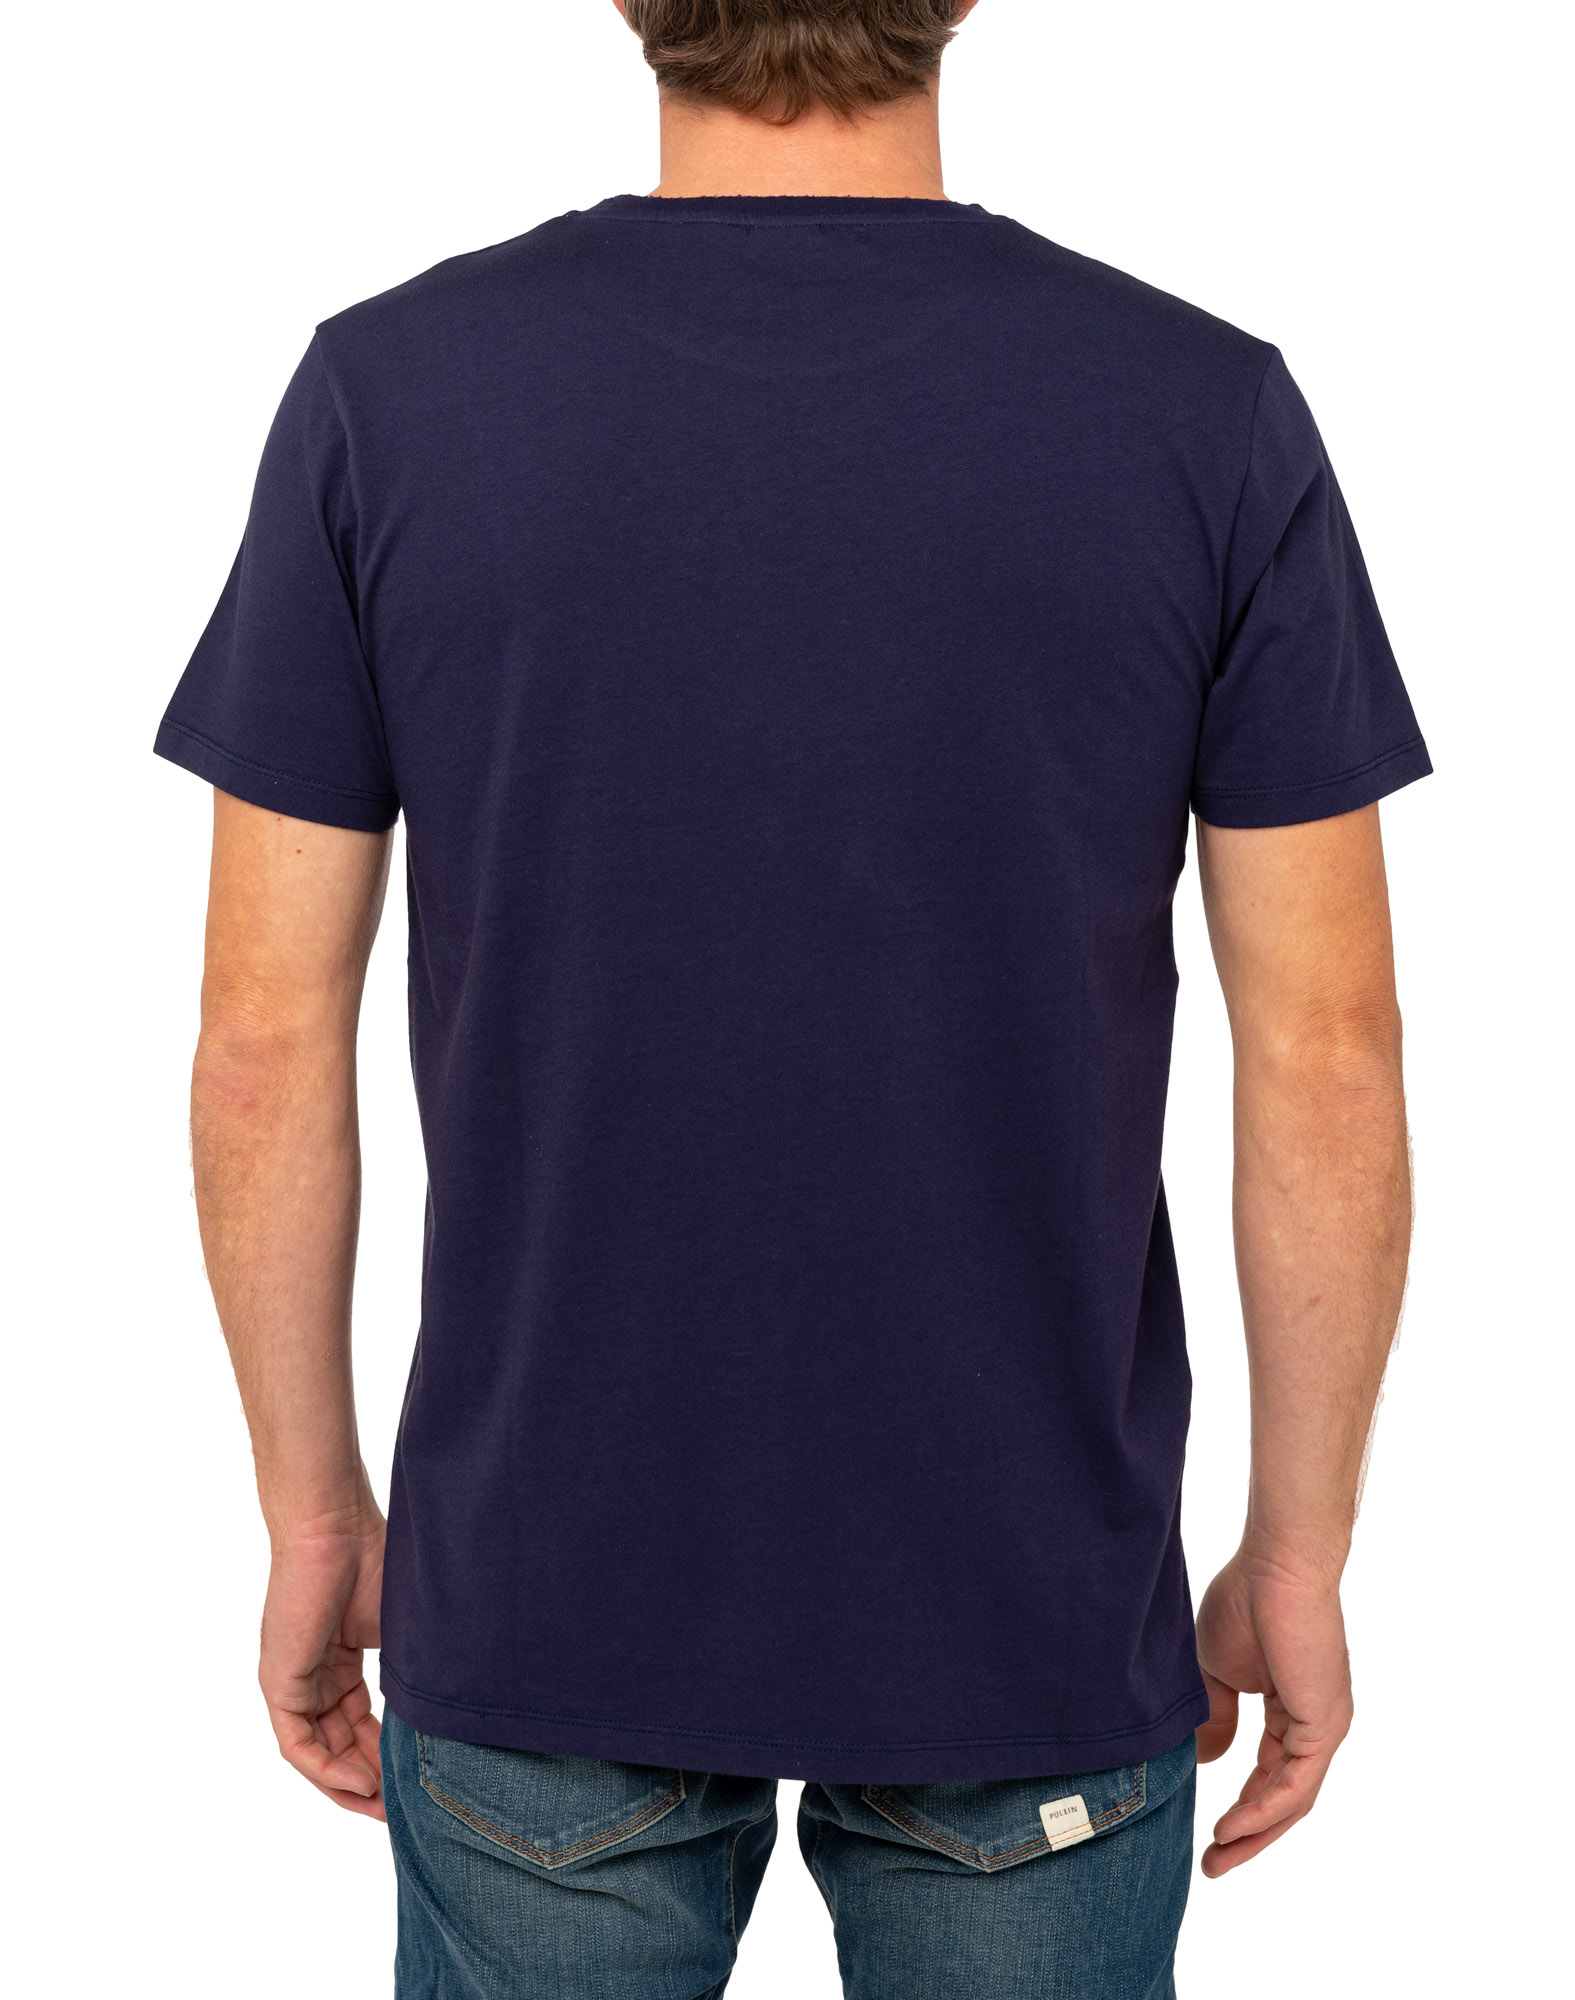 Men's t-shirt LINEHAZE3